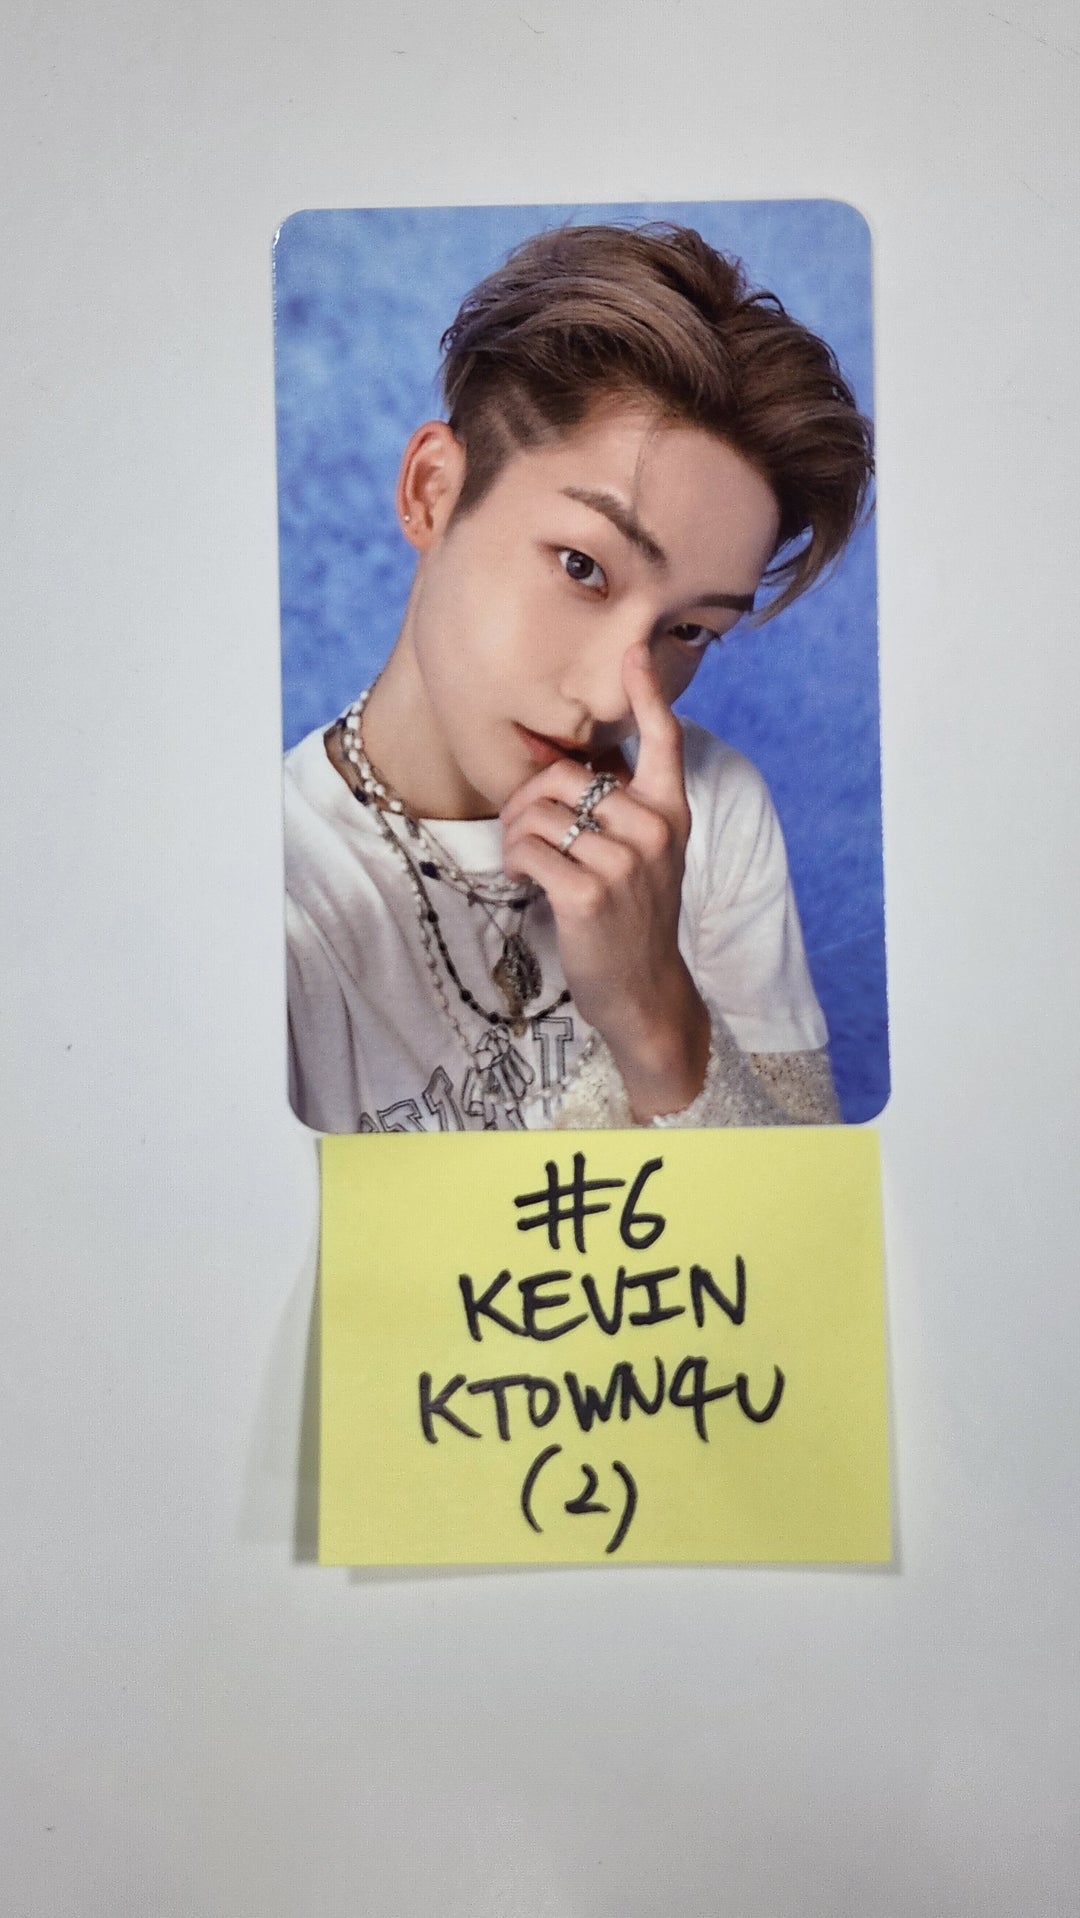 THE BOYZ "BE AWARE" 7th mini Album - Ktown4U Pre-Order Benefit Photocard